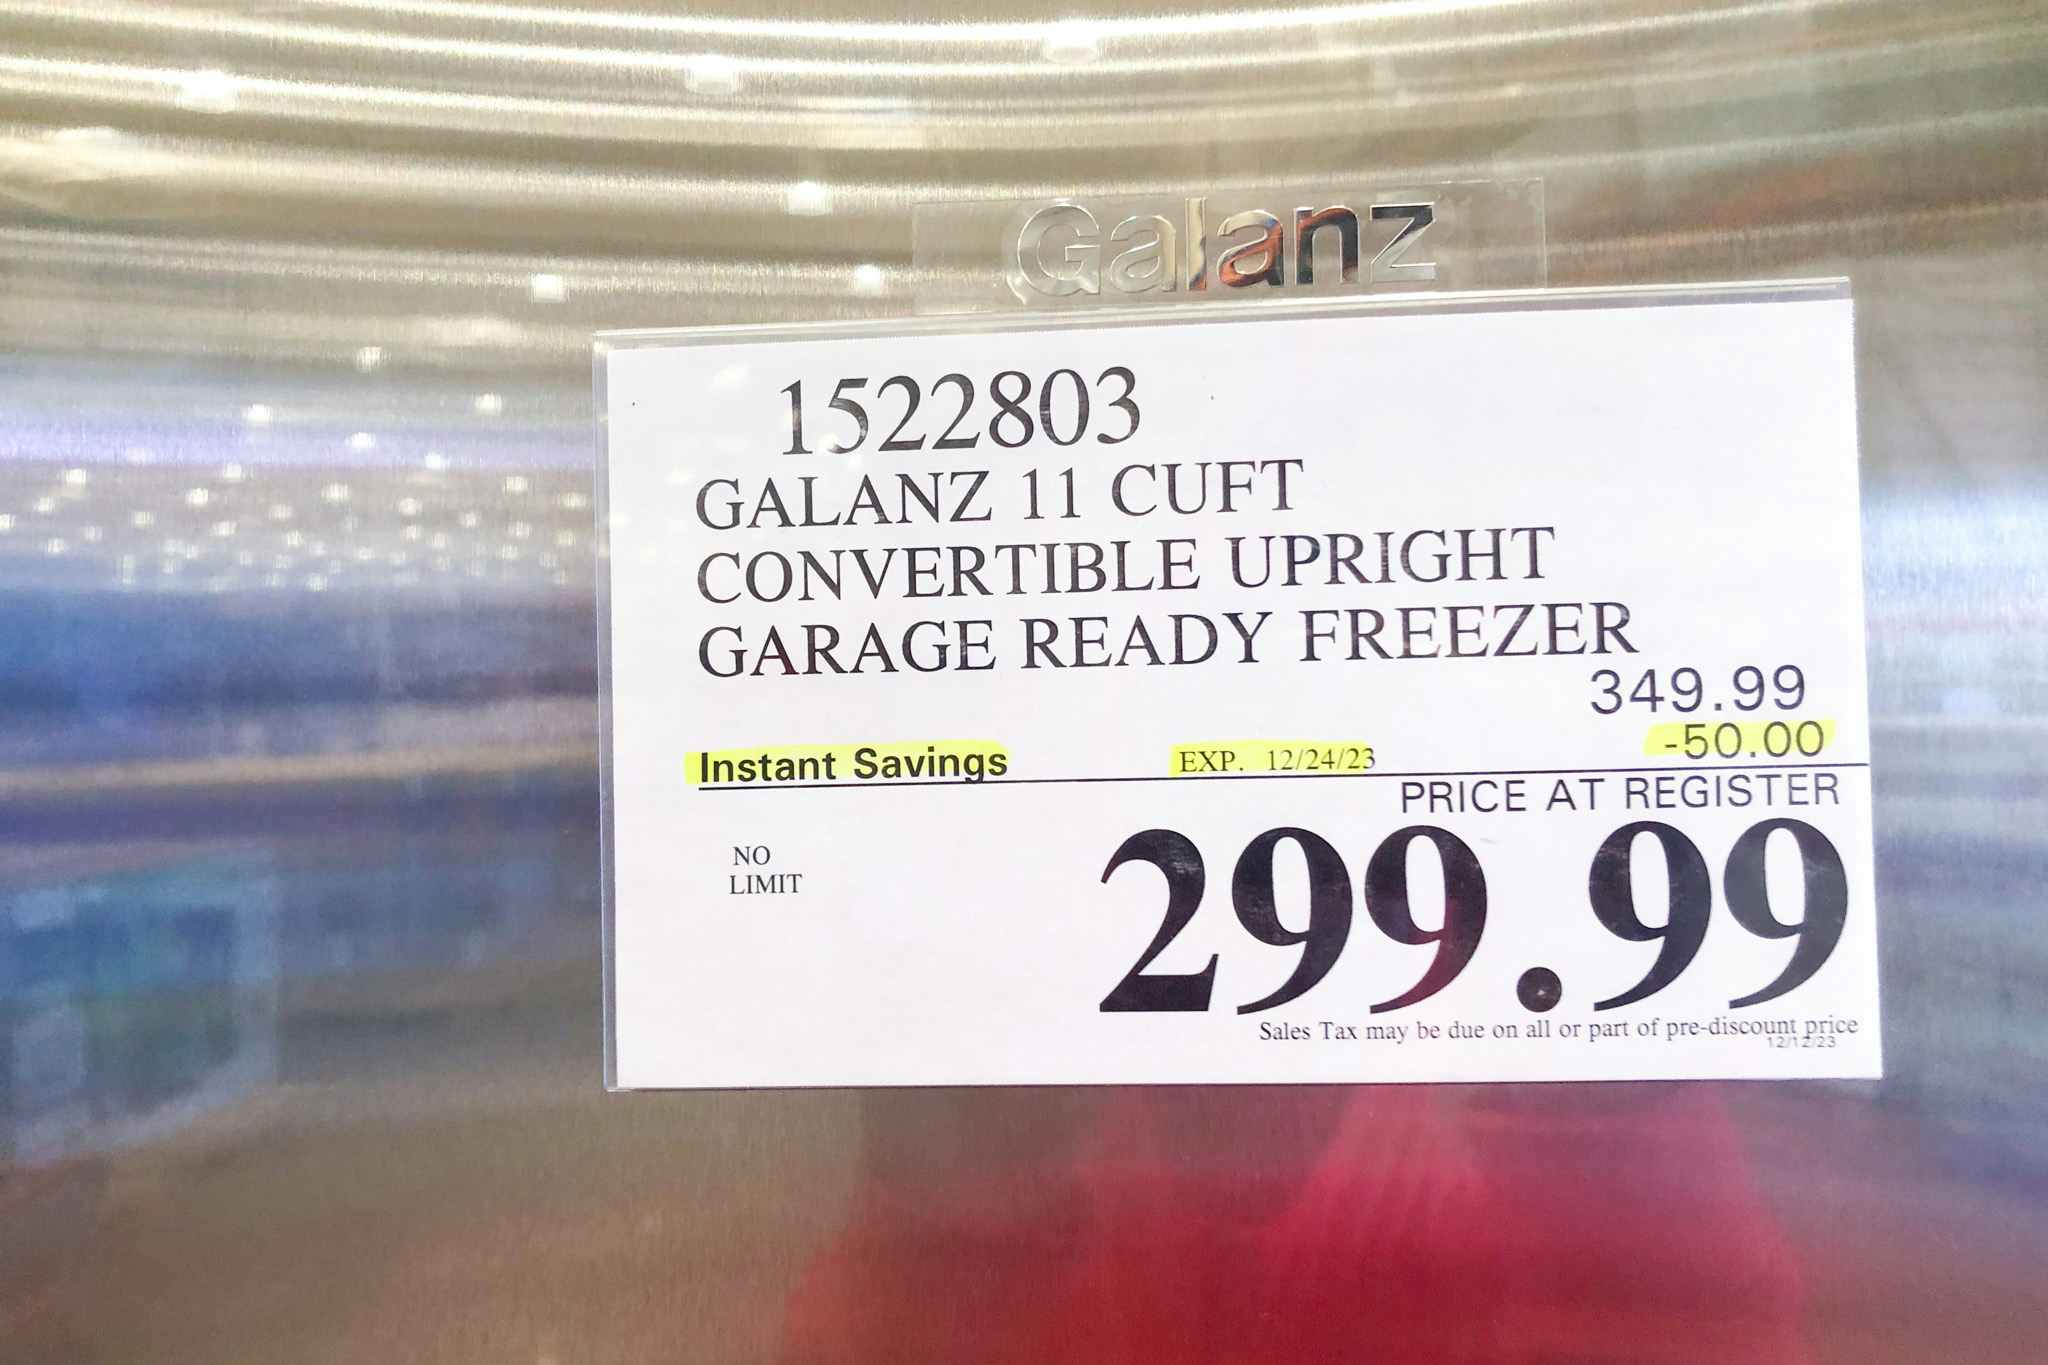 costco galanz convertible upright freezer or refrigerator tag